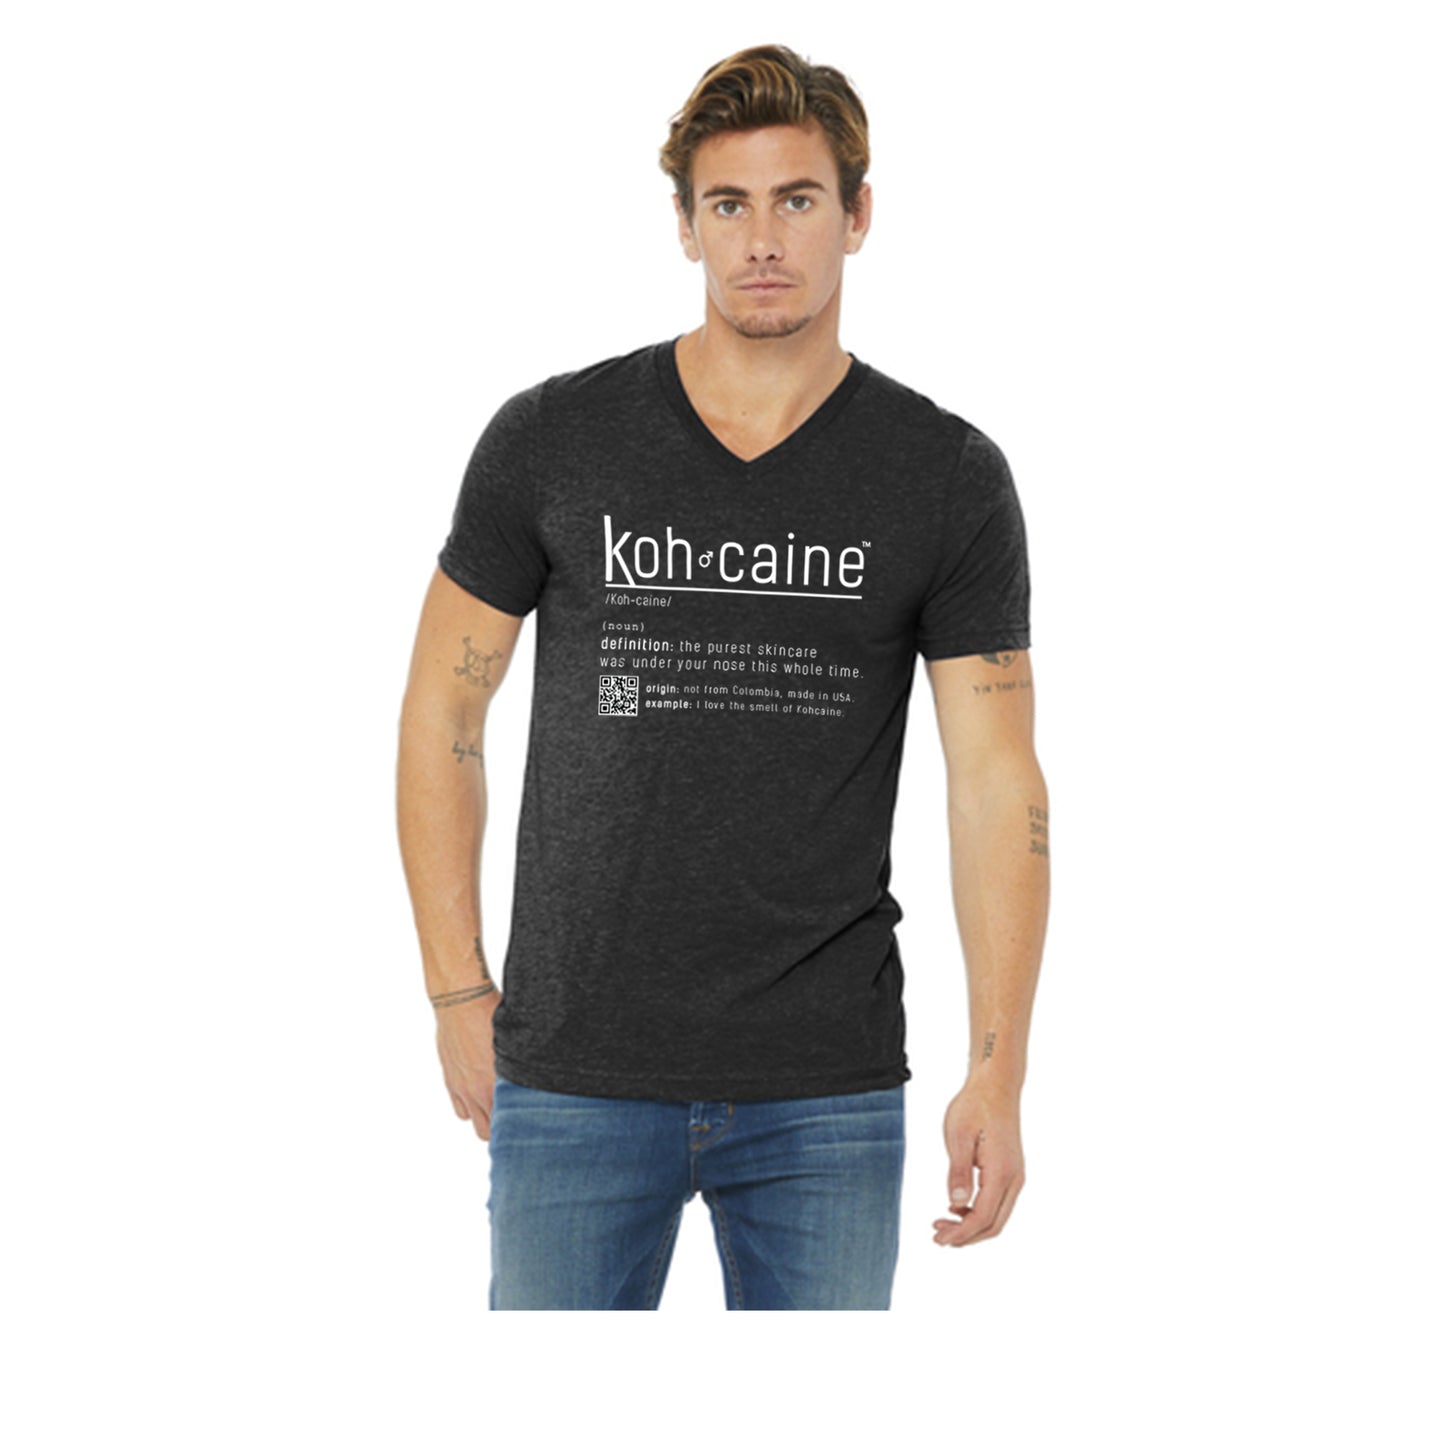 Kohcaine V-Neck T Shirt (Definition)